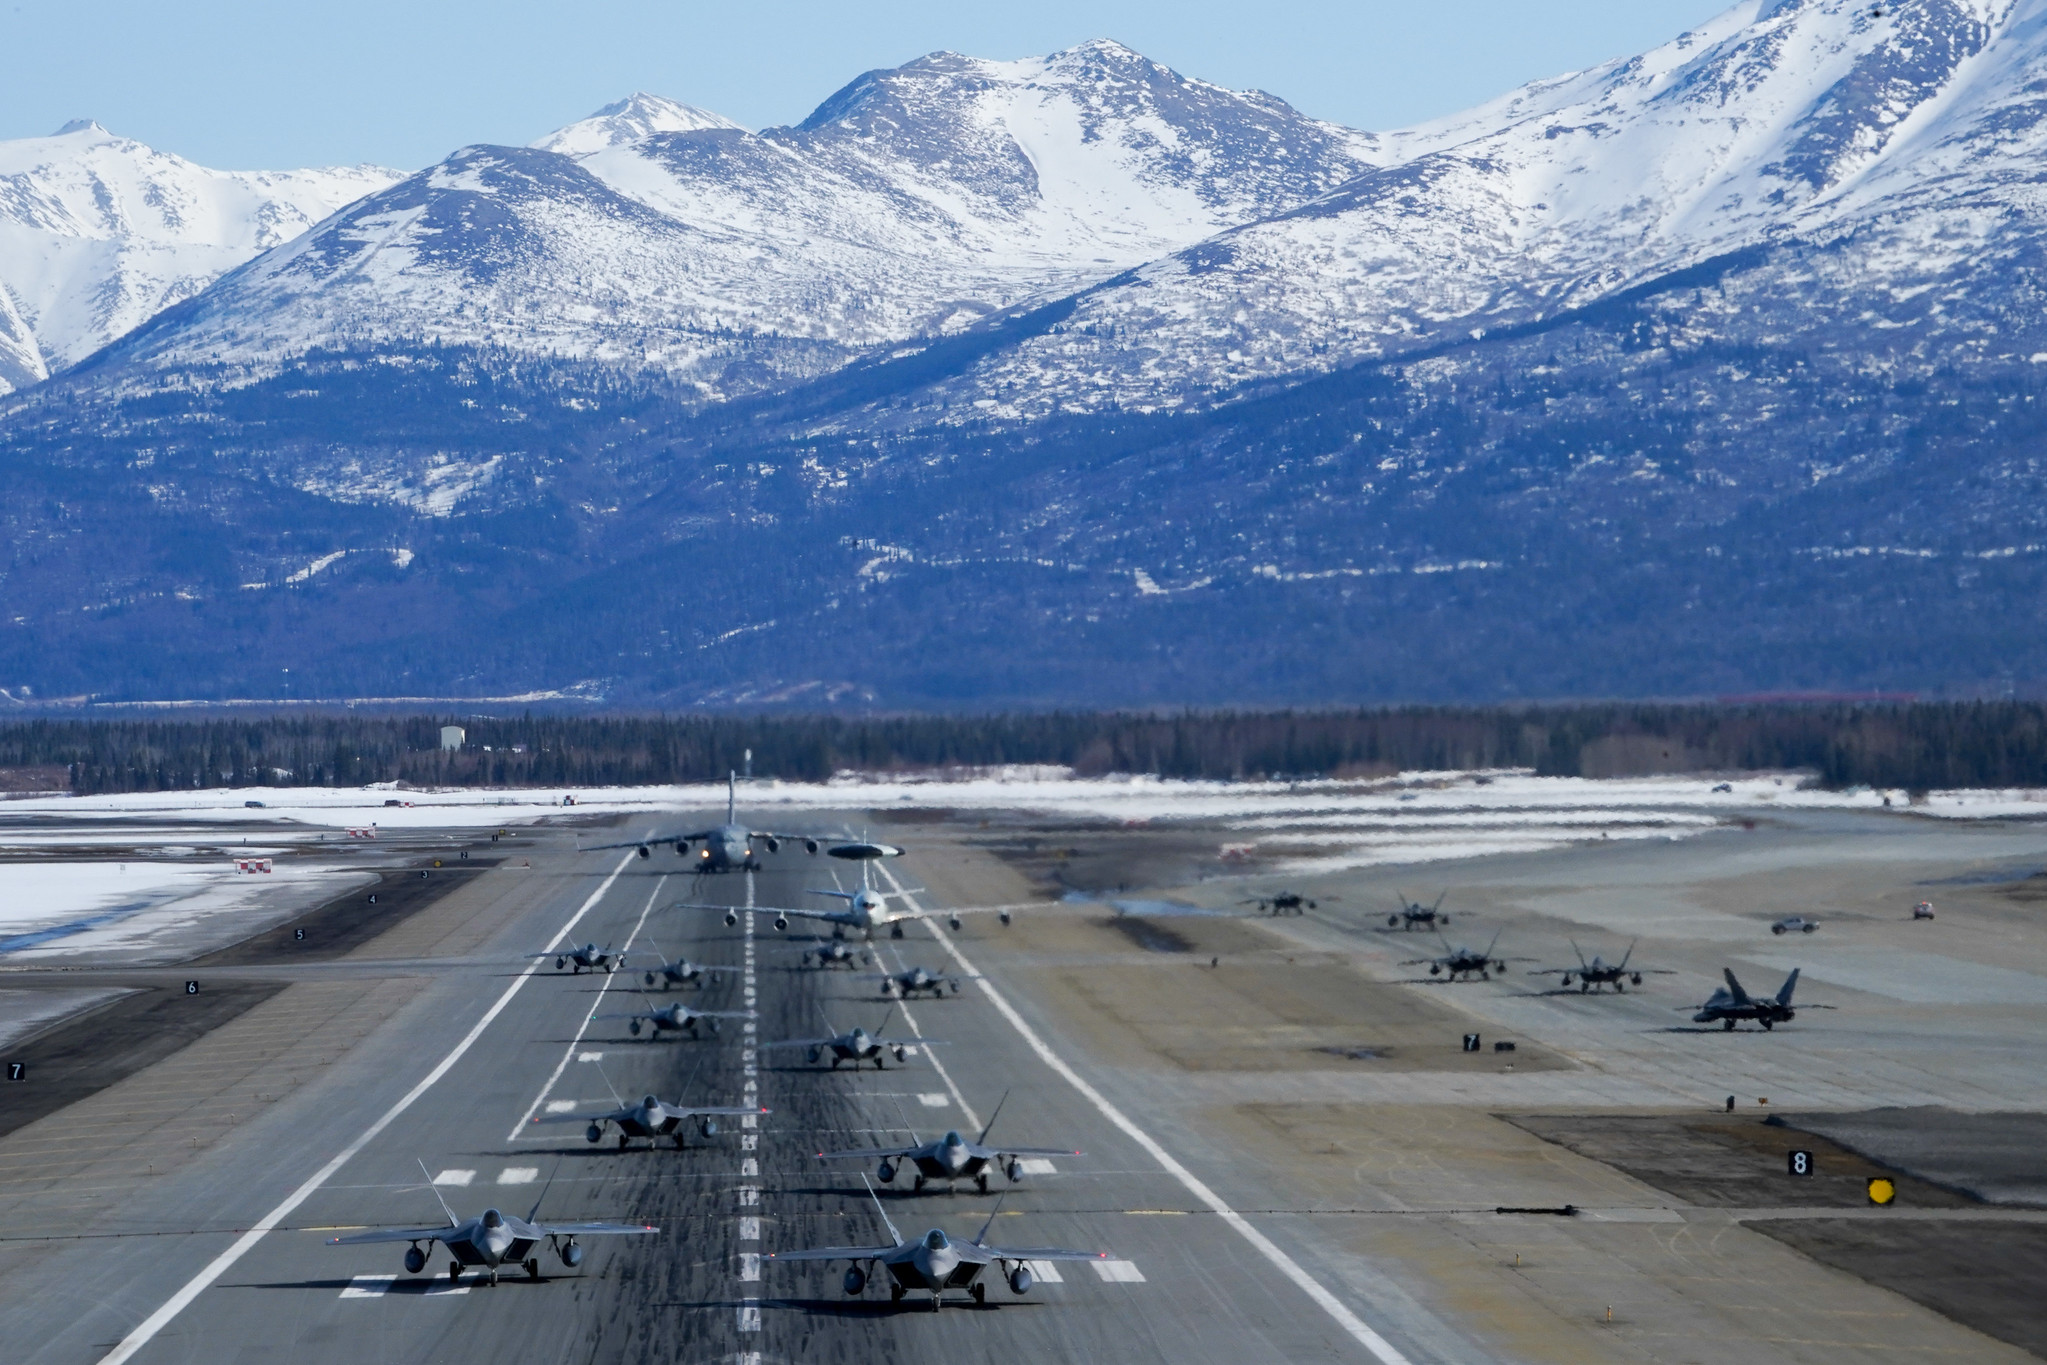 F-22a Raptor Alaska Air Base. ВВС США авиабаза. База ВВС США на Аляске. Аэродром базирования f22. Аляска аэропорт